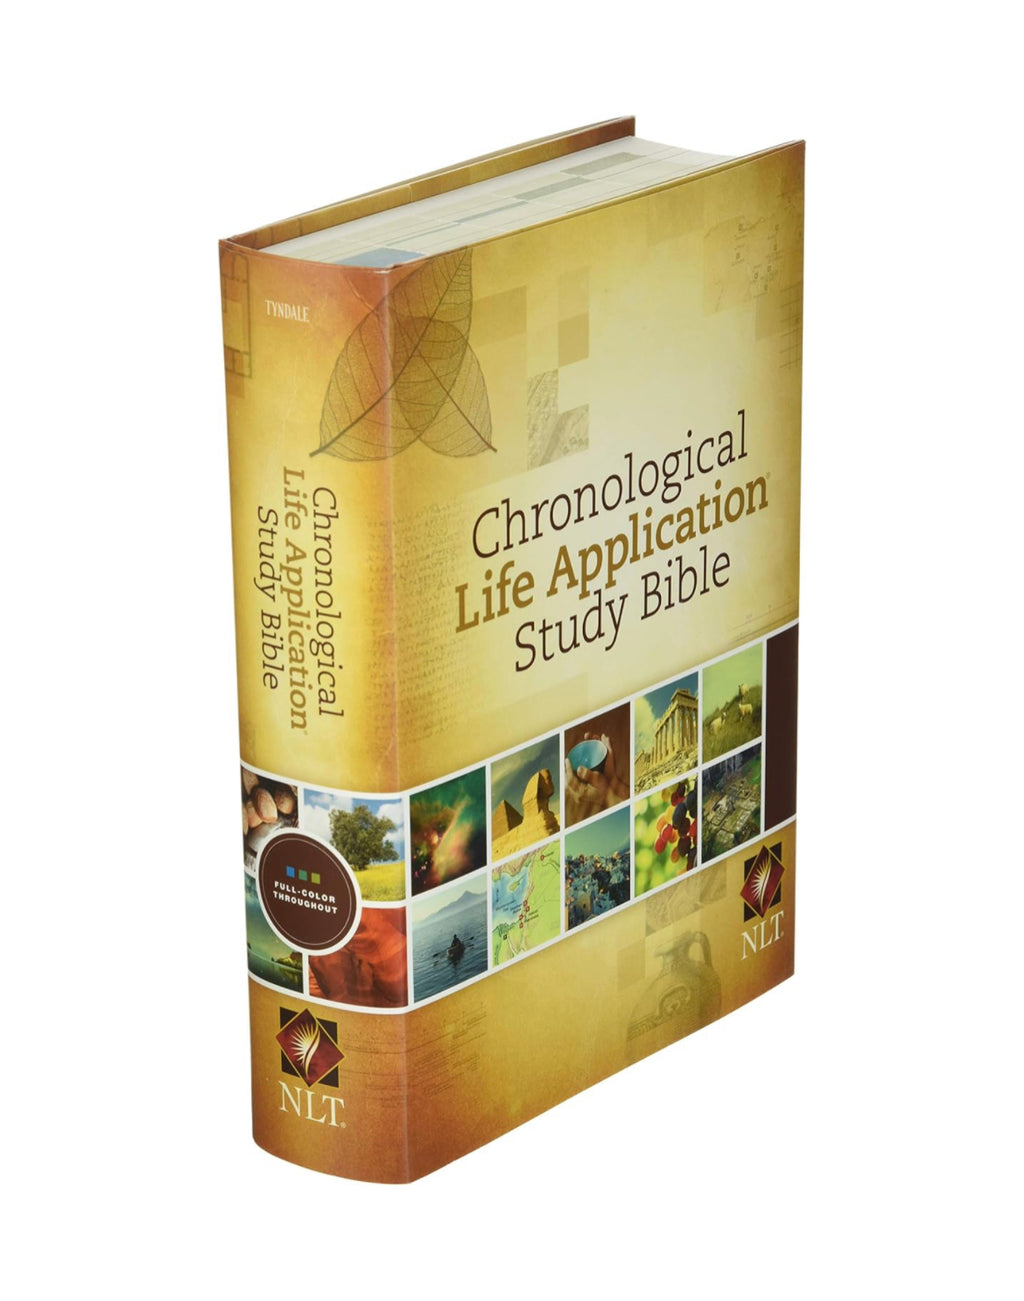 NLT Chronological Life Application Study Bible - I AM INTENTIONAL 